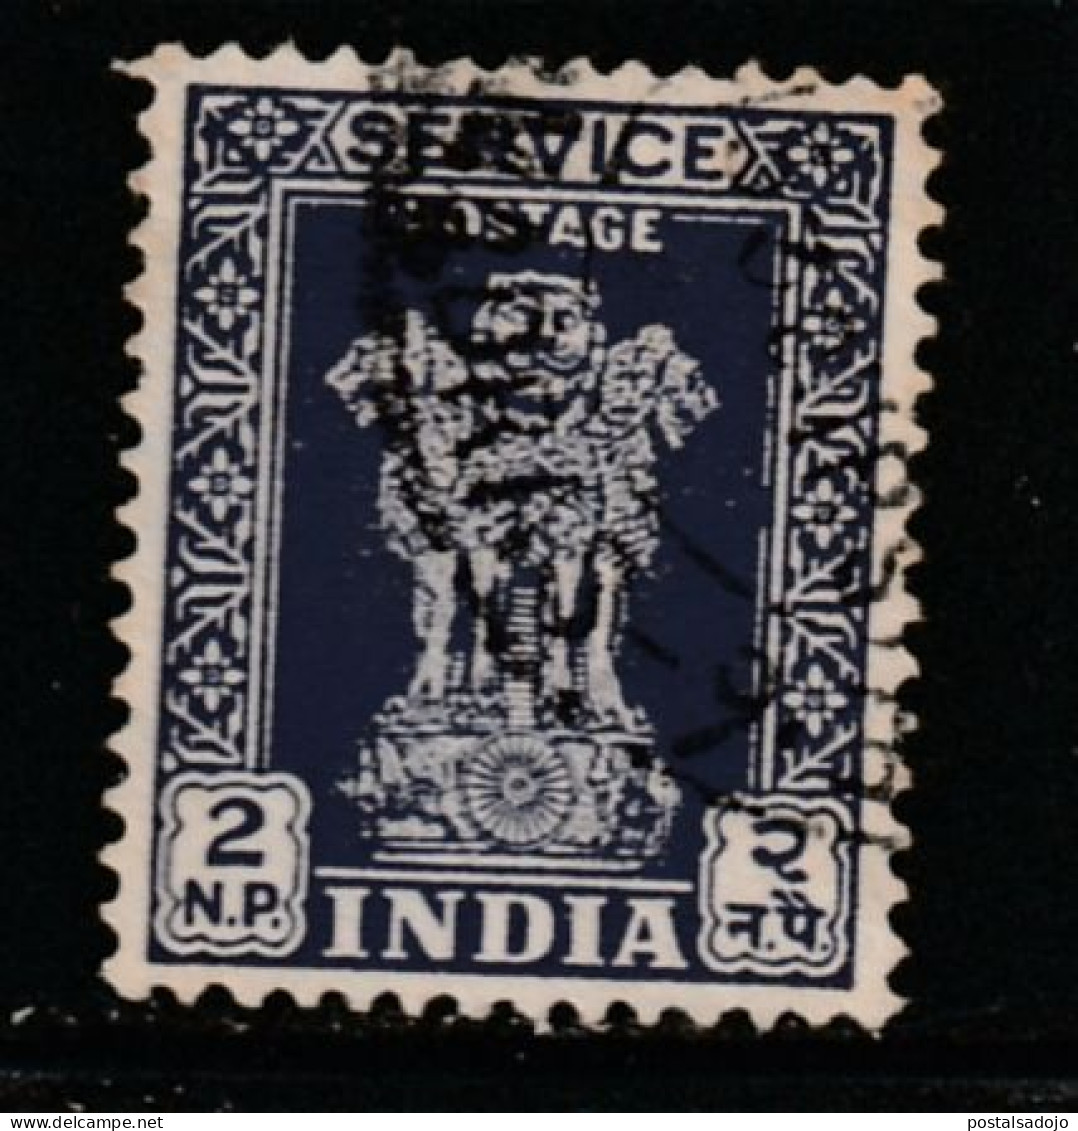 INDE 612 // YVERT 24  // 1959-63 - Dienstzegels